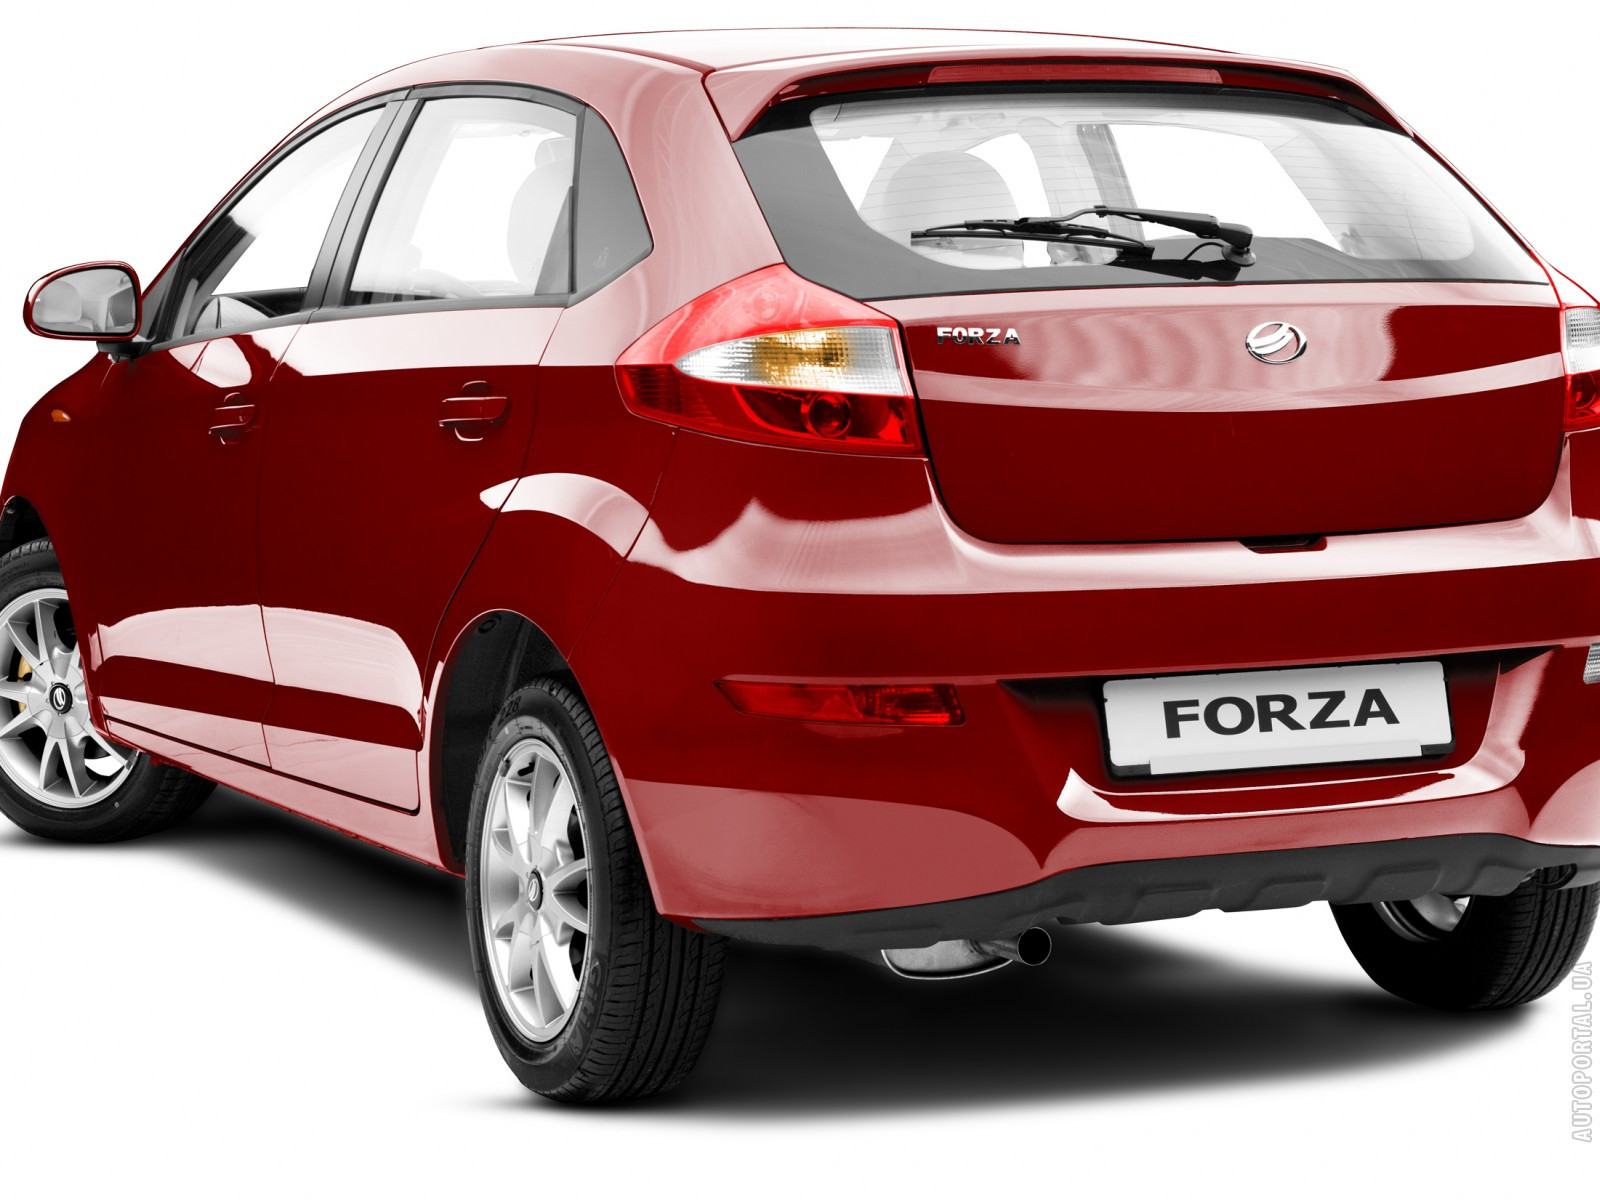 Zaz forza технические характеристики. автомобиль заз forza: технические и эксплуатационные характеристики, отзывы